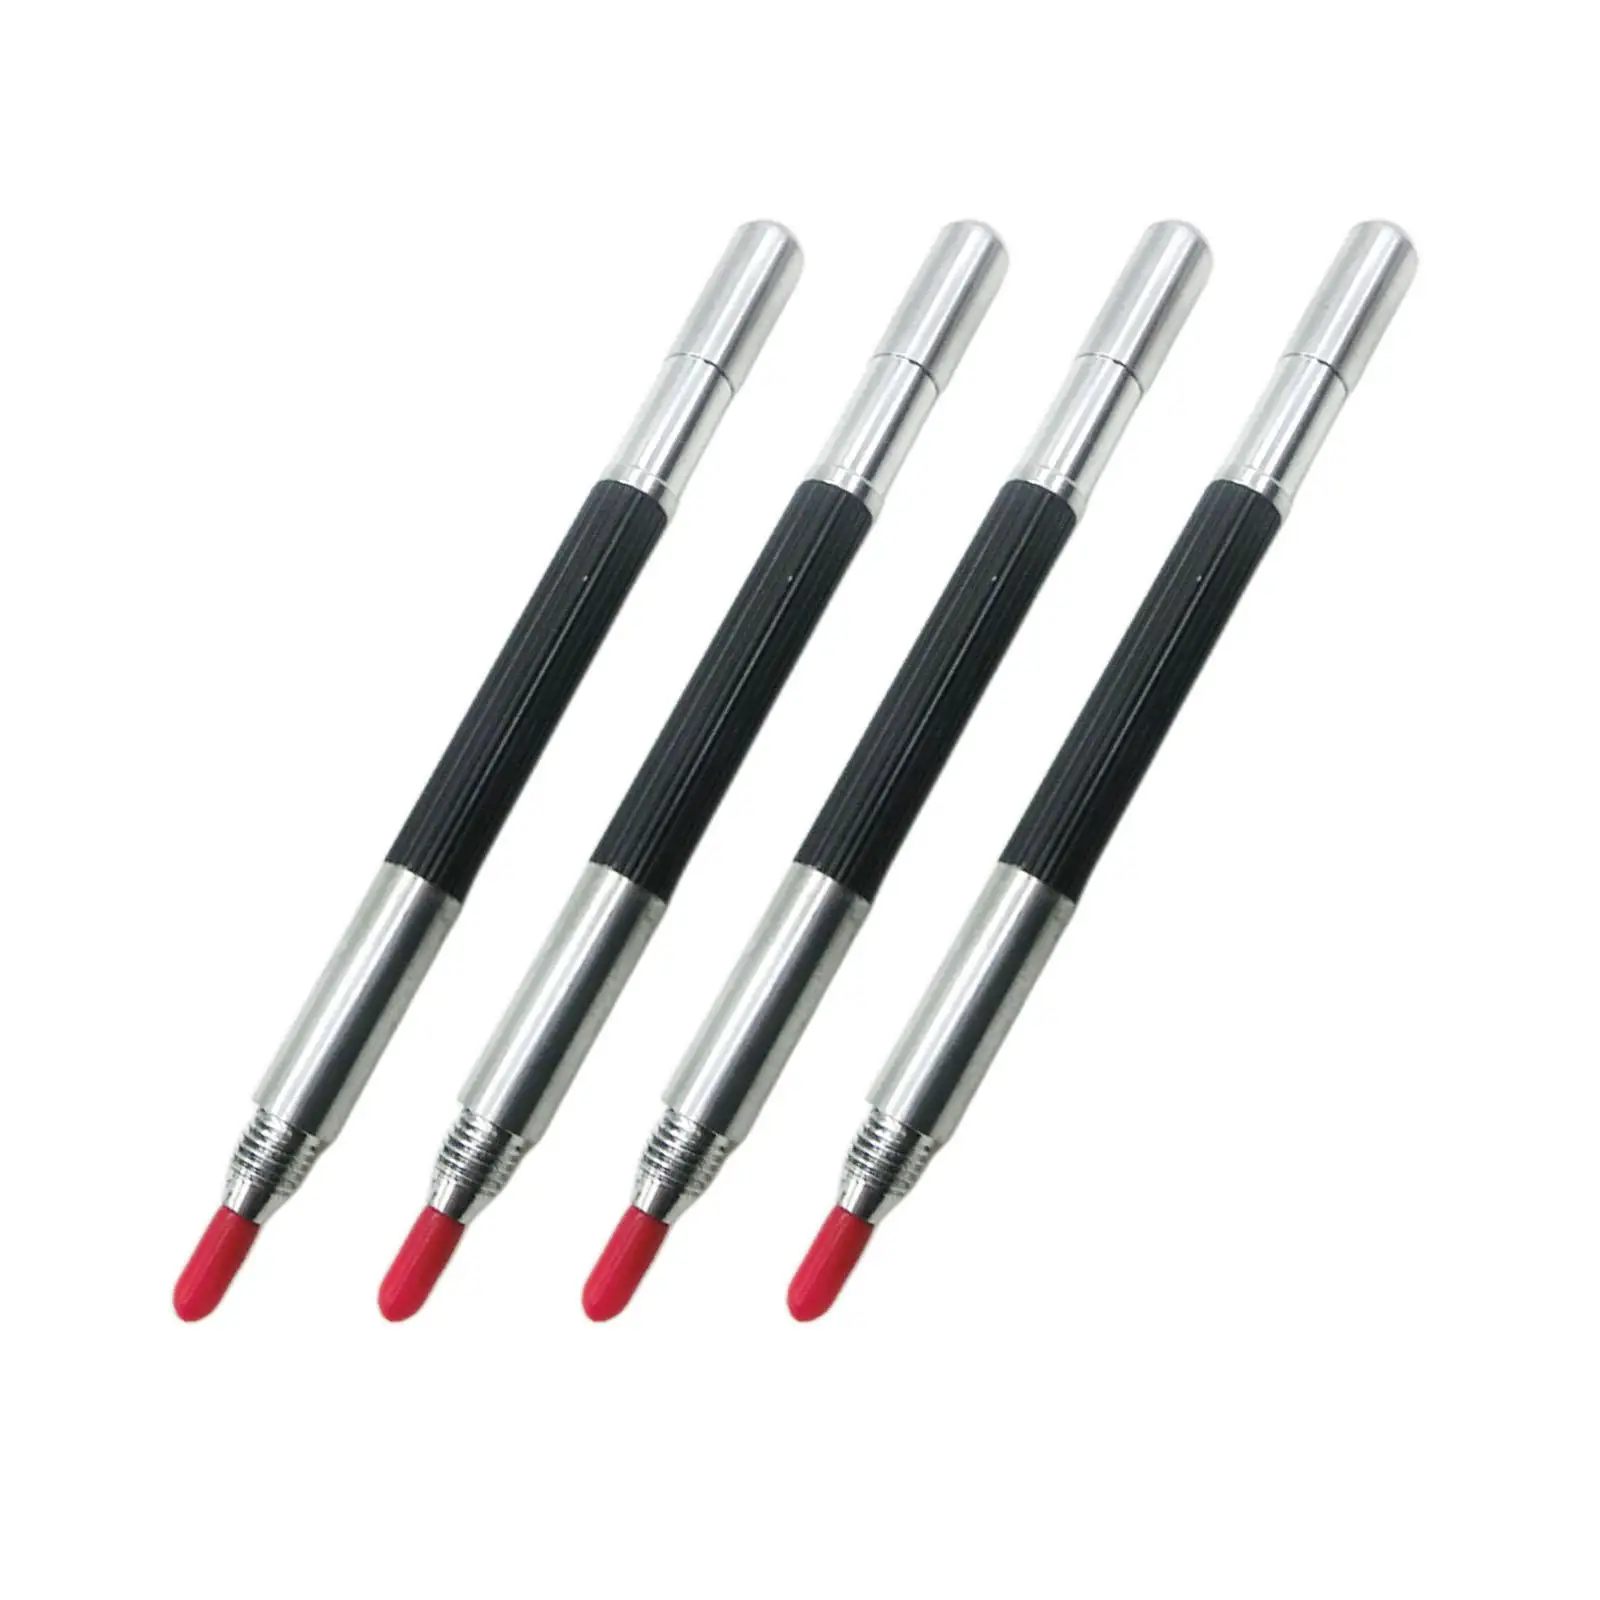 4x Engraving Pen Long Nib Double Ended Construction Marking Tools Deep Reach Markers Durable Tungsten Carbide Scribing Pens for